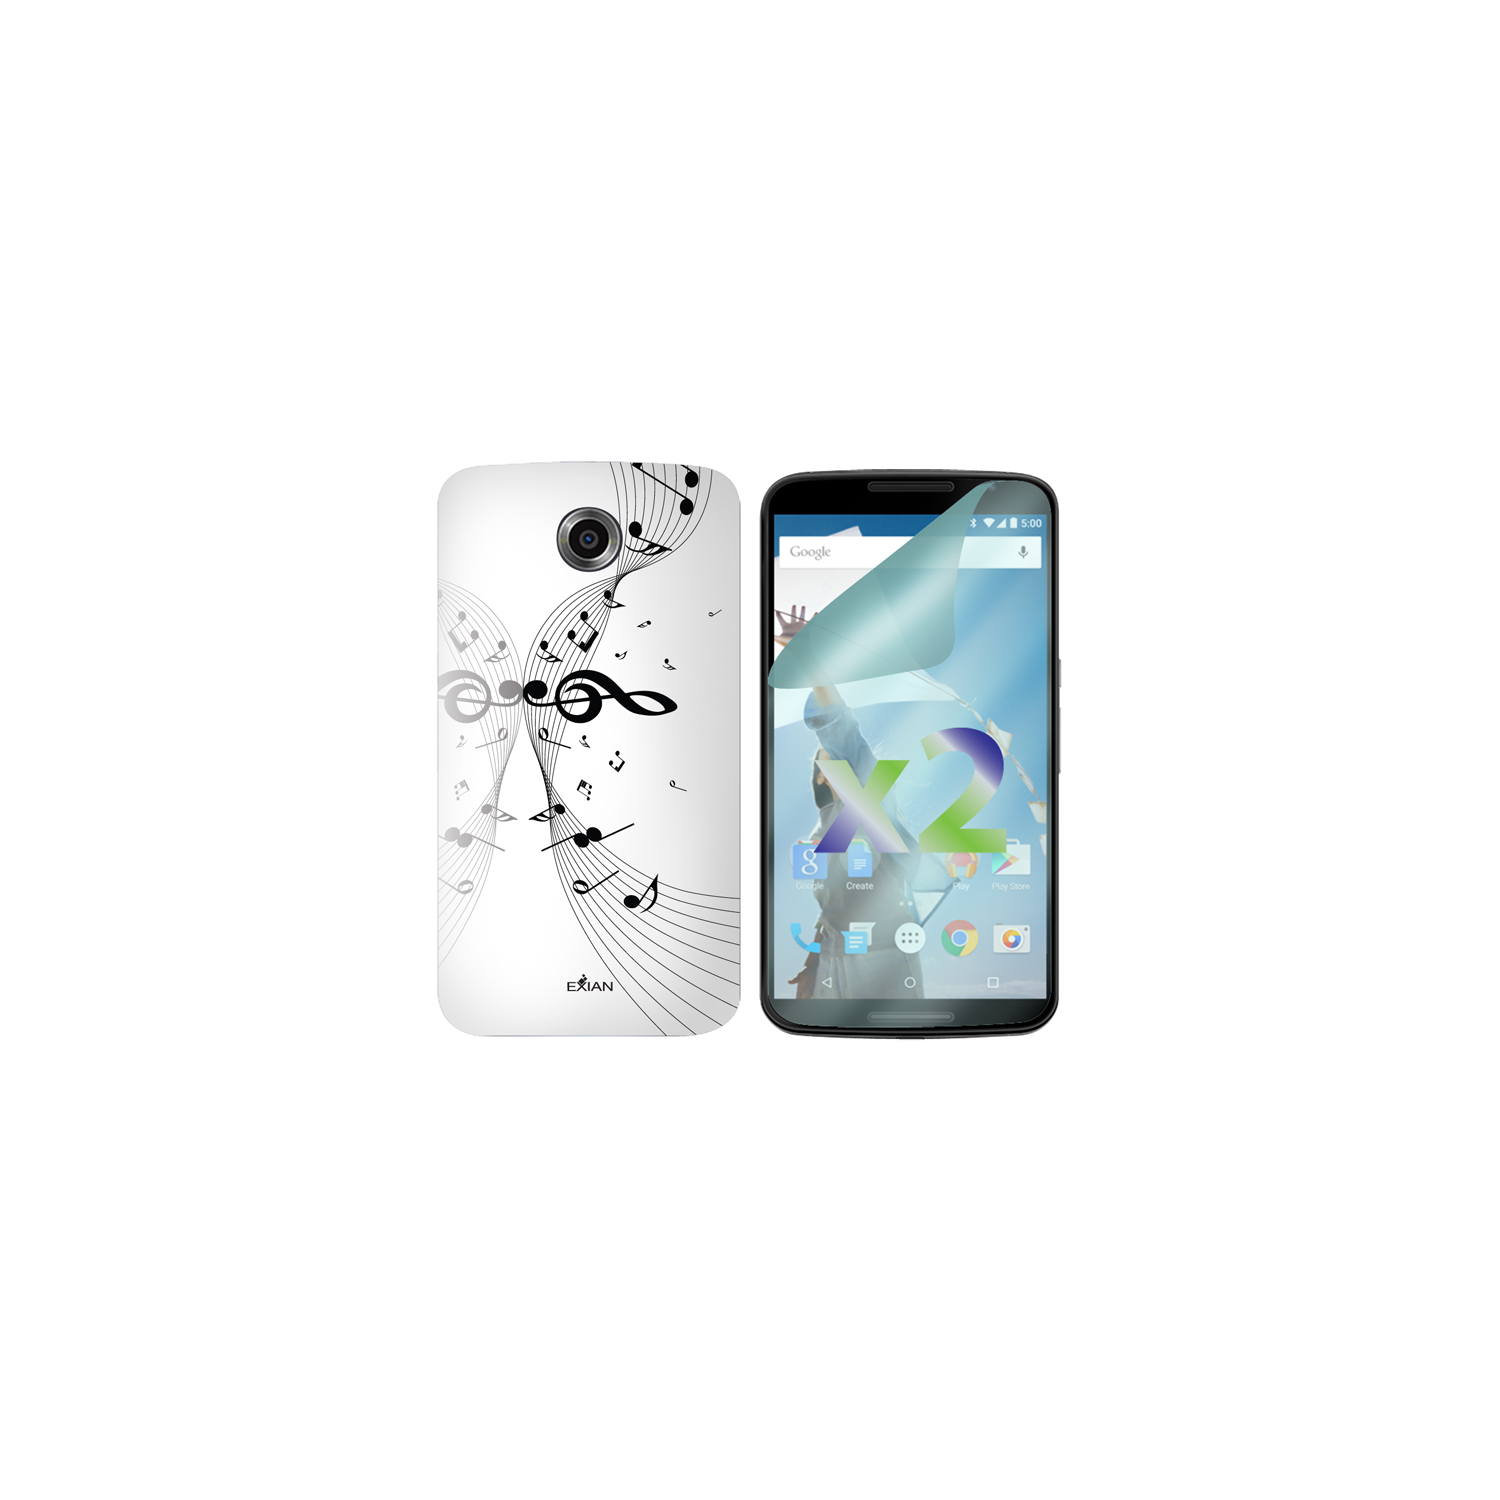 Exian LG Google Nexus 6 Screen Protectors X 2 and TPU Case Exian Design Musical Notes White